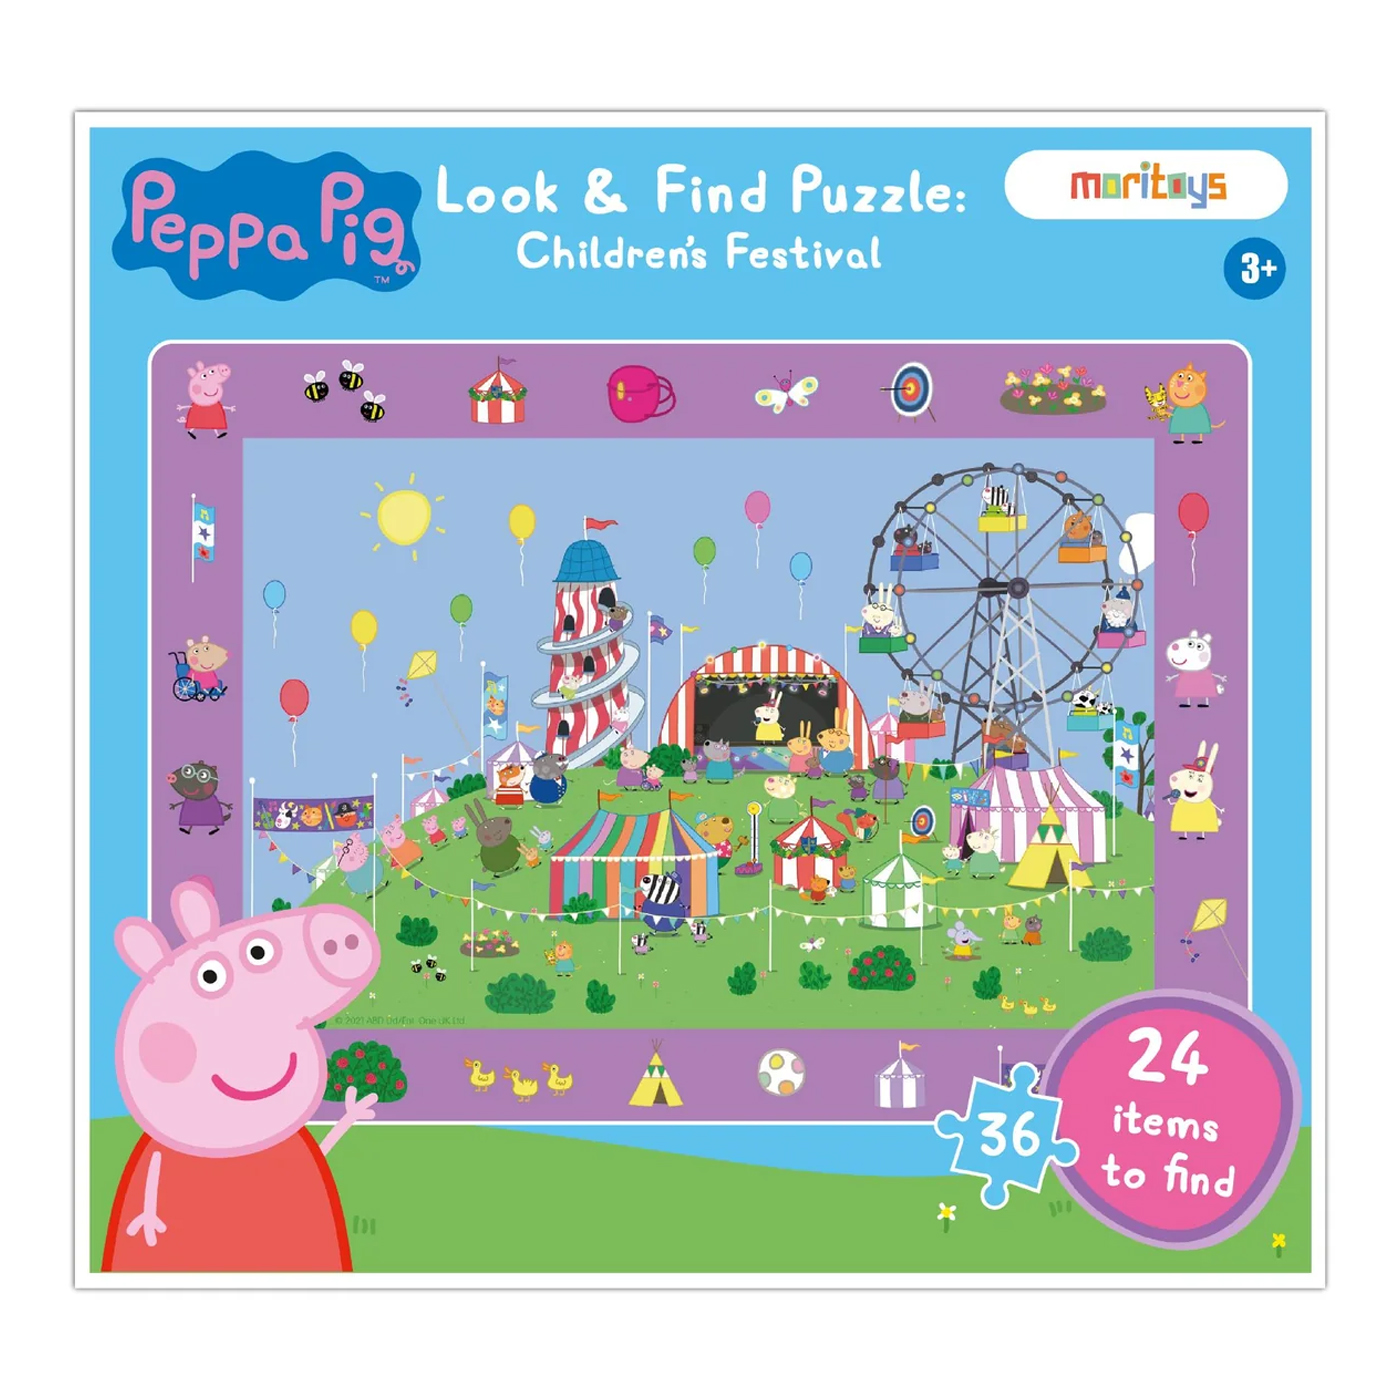  Peppa Pig - Look & Find Puzzle: Children's Festival - 36 Parçalı Yapboz ve Gözlem Oyunu